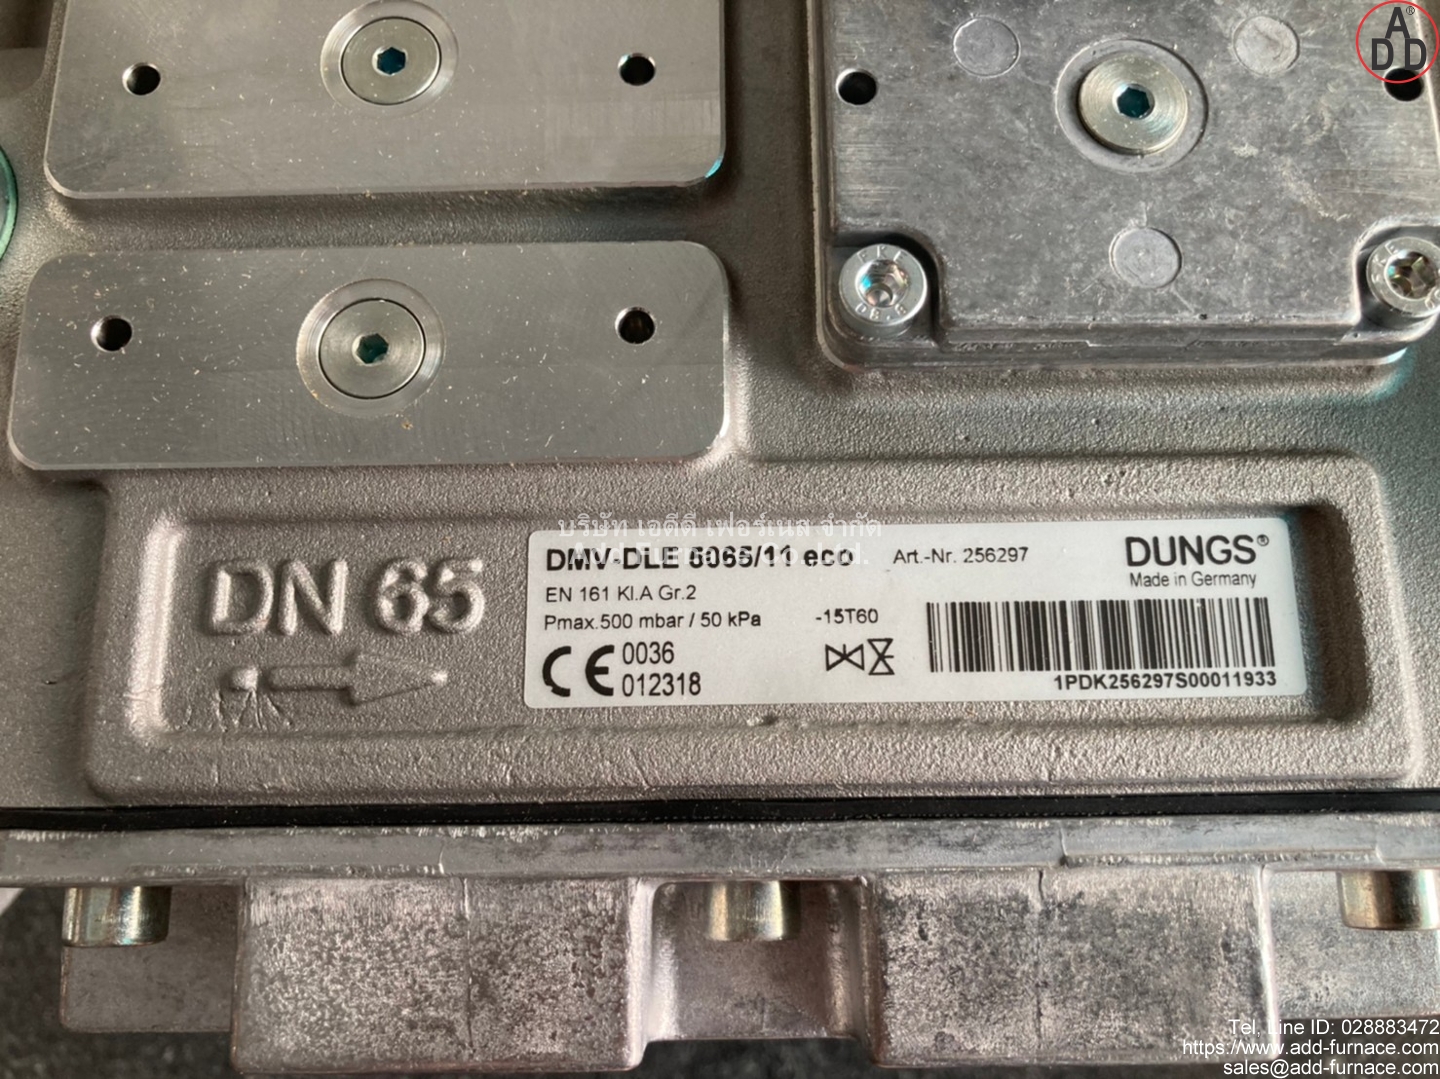 DMV-DLE 5065/11 eco (2)